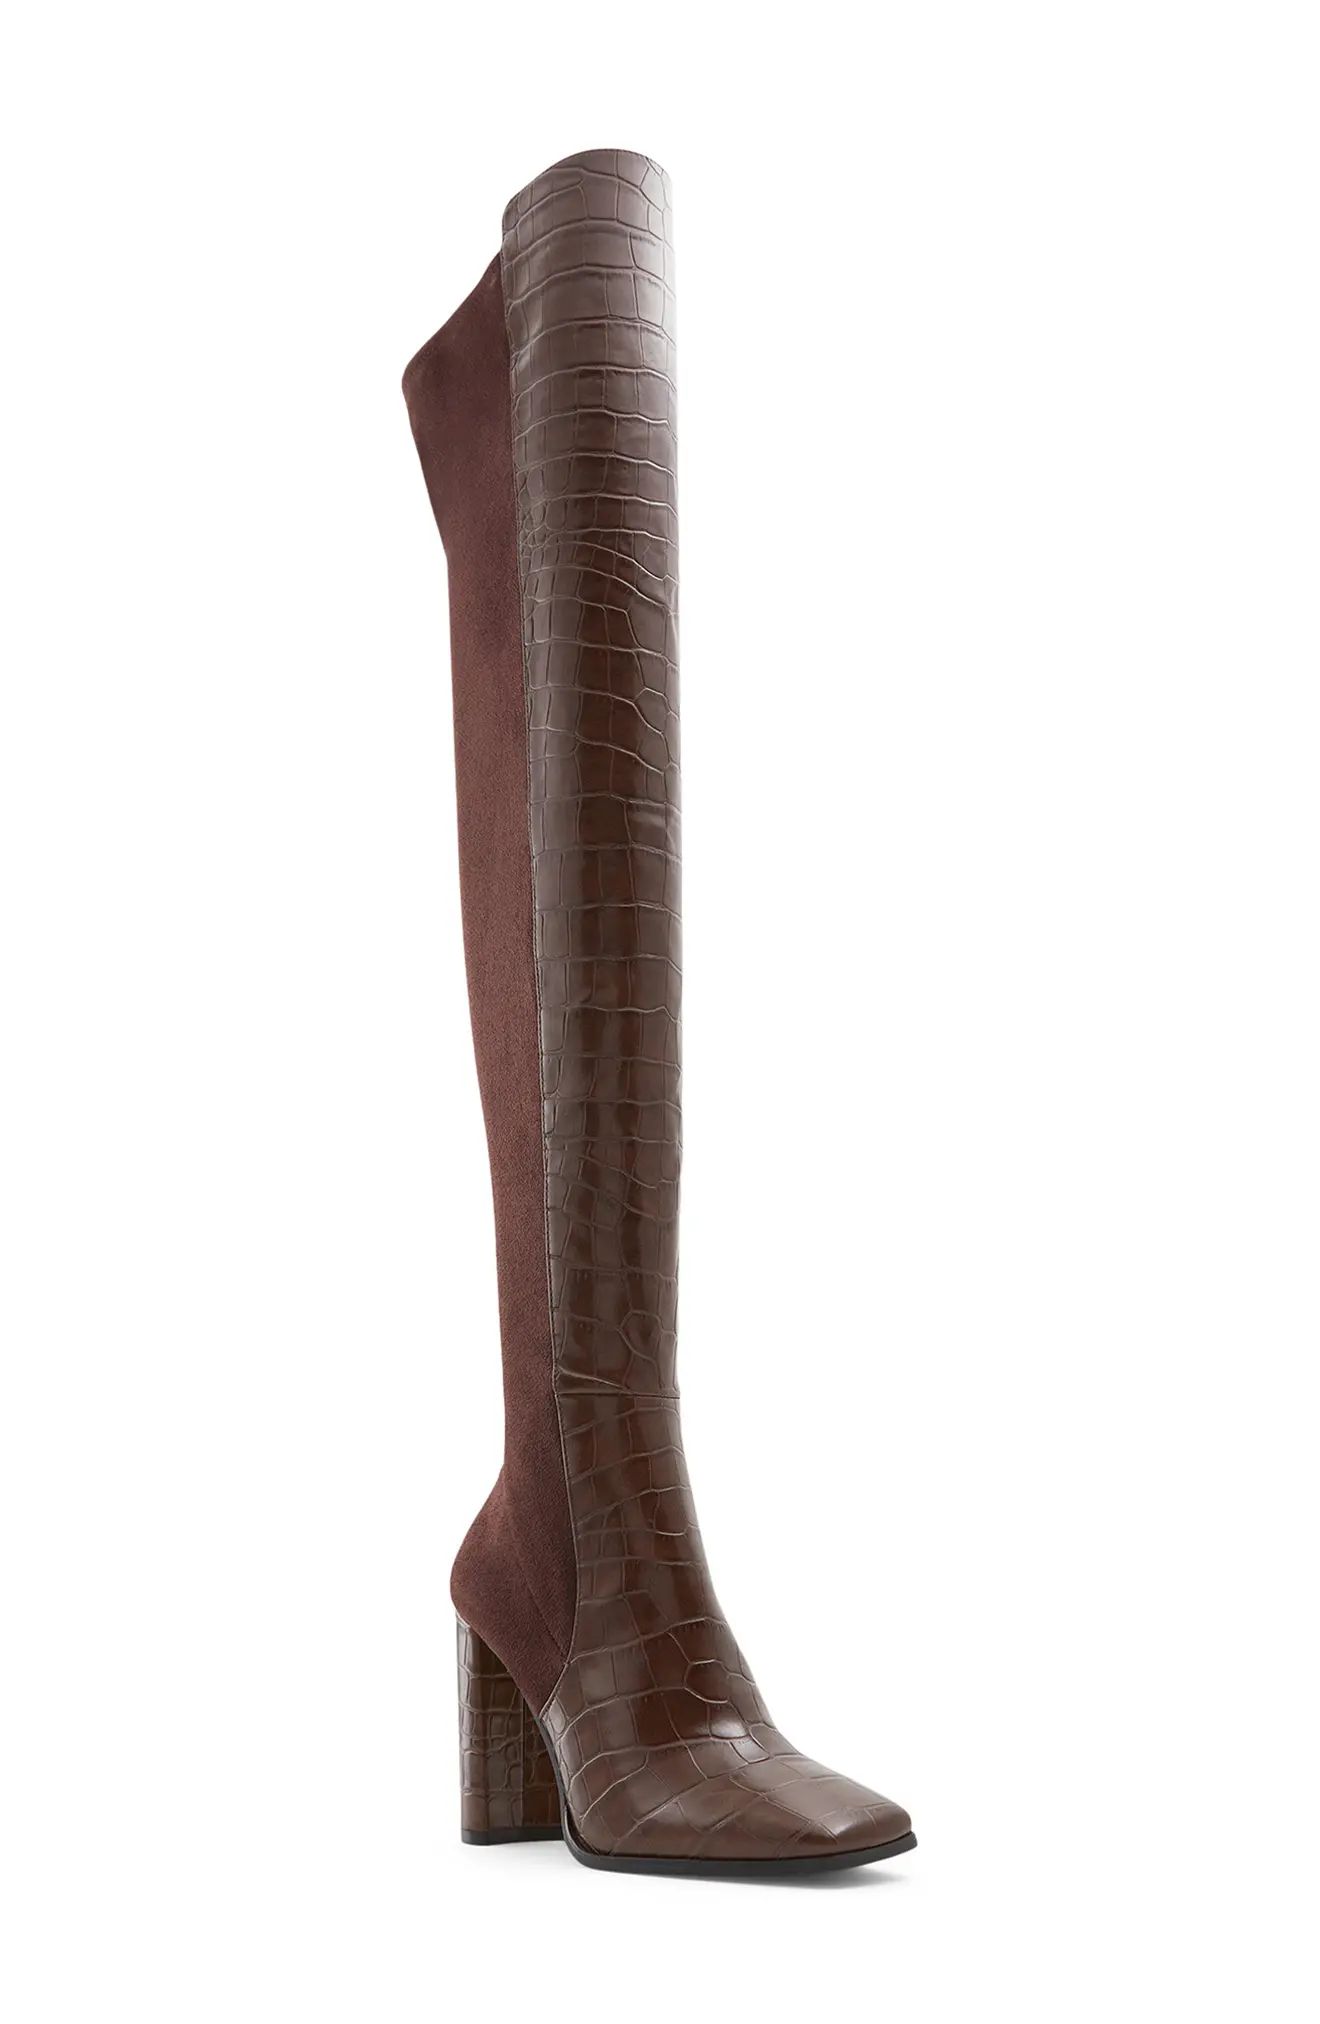 ALDO Choan Over the Knee Boot, Size 8 in Dark Brown at Nordstrom | Nordstrom